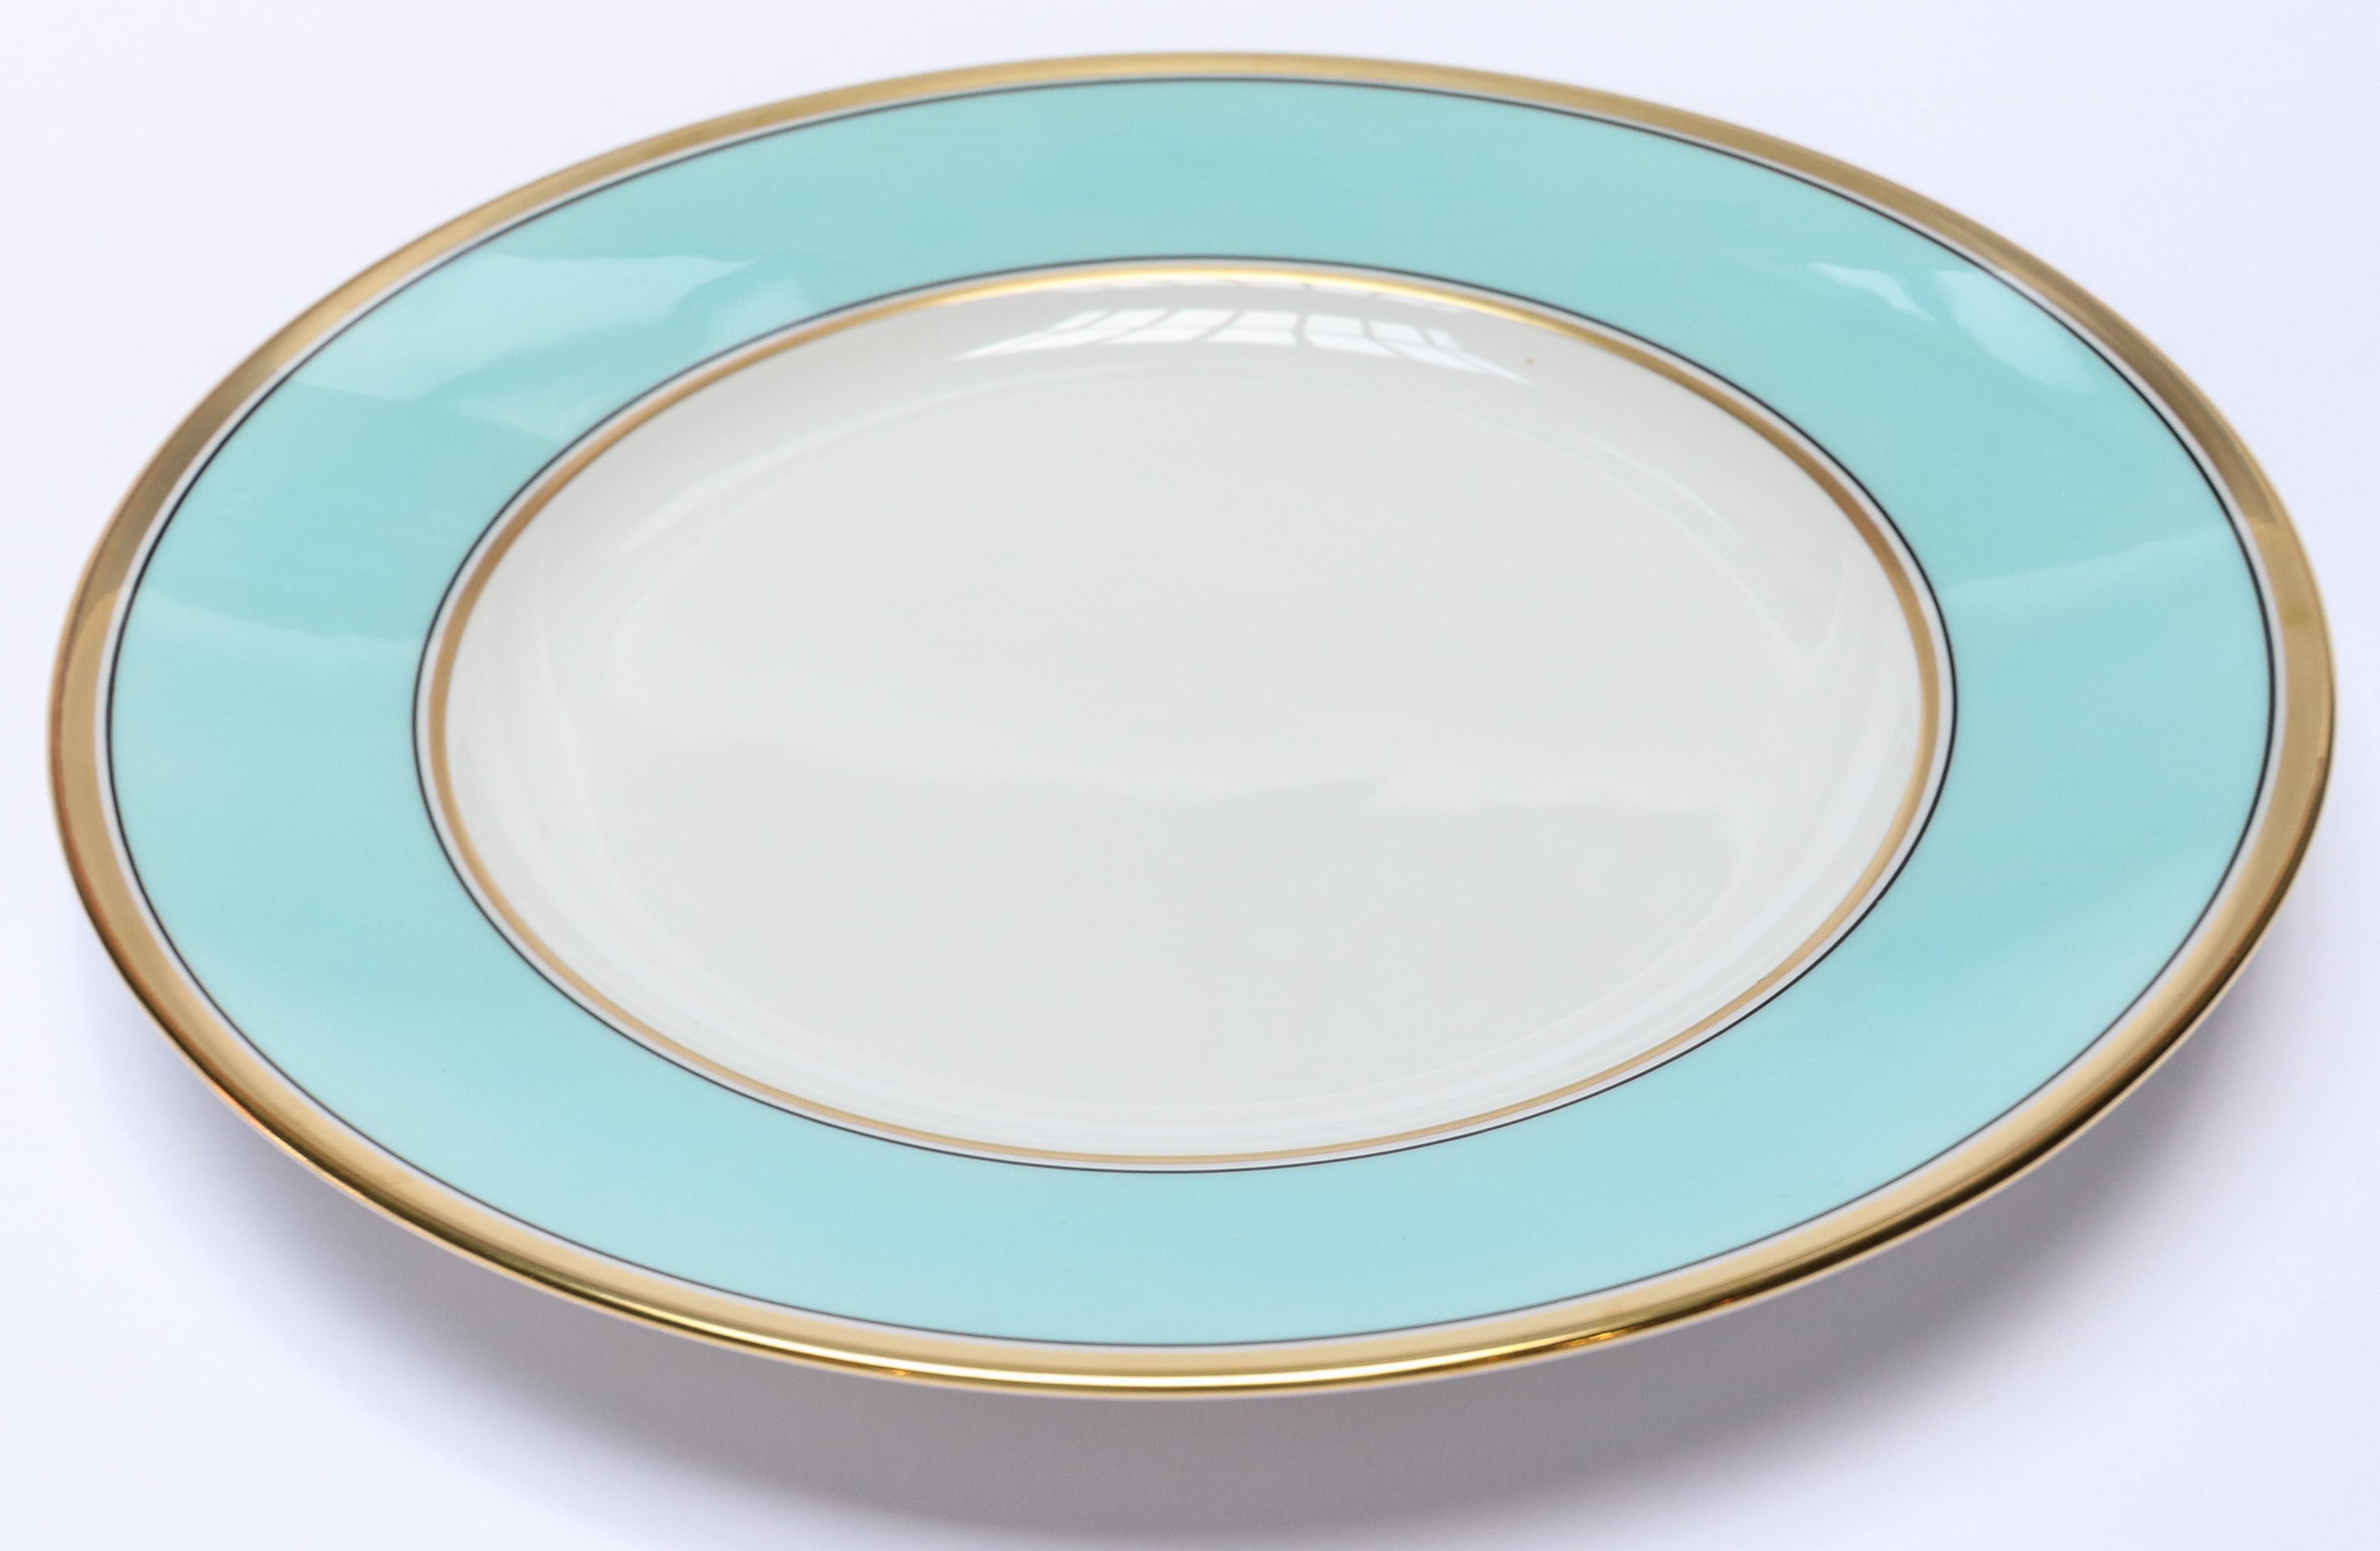 Richard Ginori contessa indaco blue dinner plate in the Impero shape 26.5cm in diameter.
  